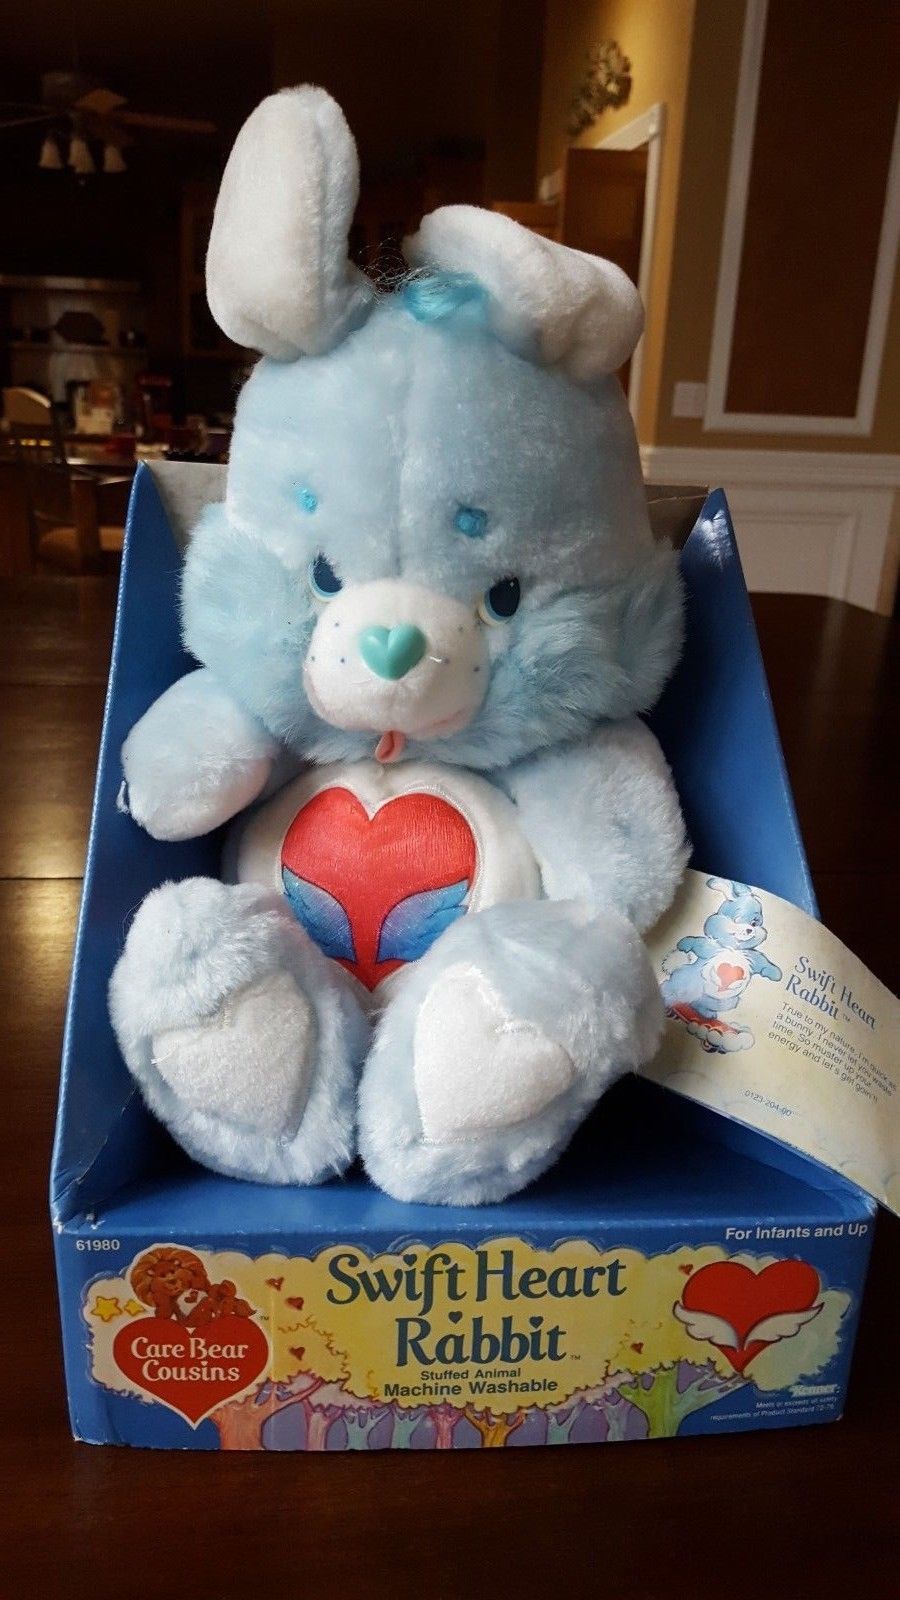 Vintage Care Bears Cousins Swift Heart Rabbit 1985 in Original Box Kenner